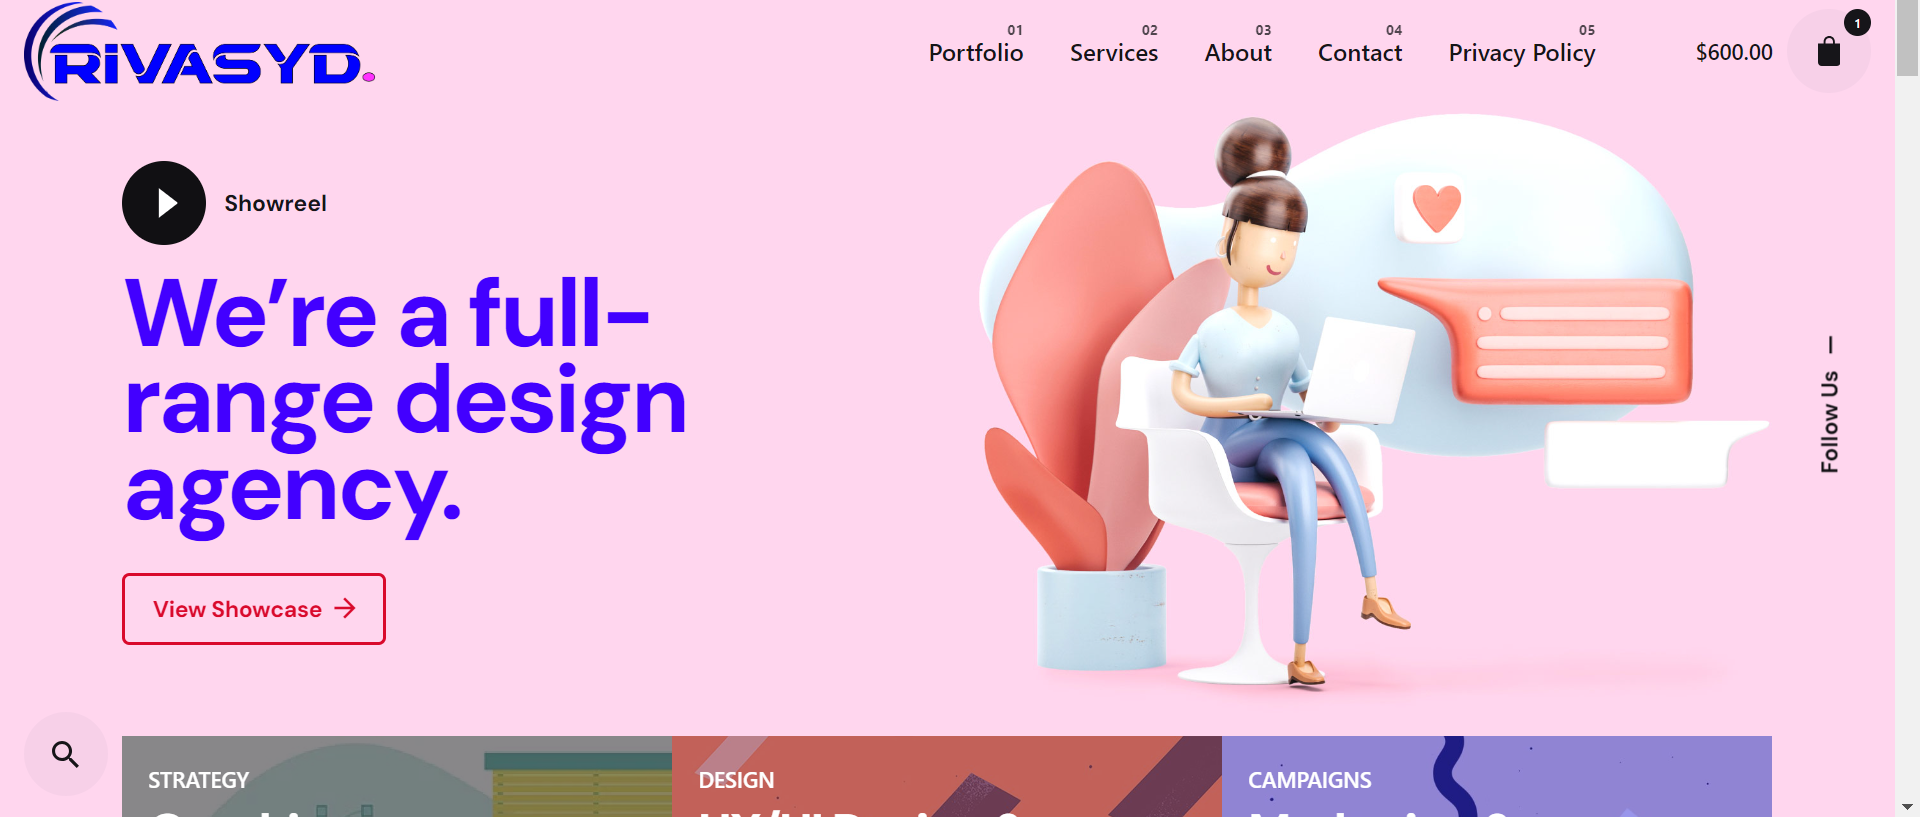 Rivasyd Agency Website Design